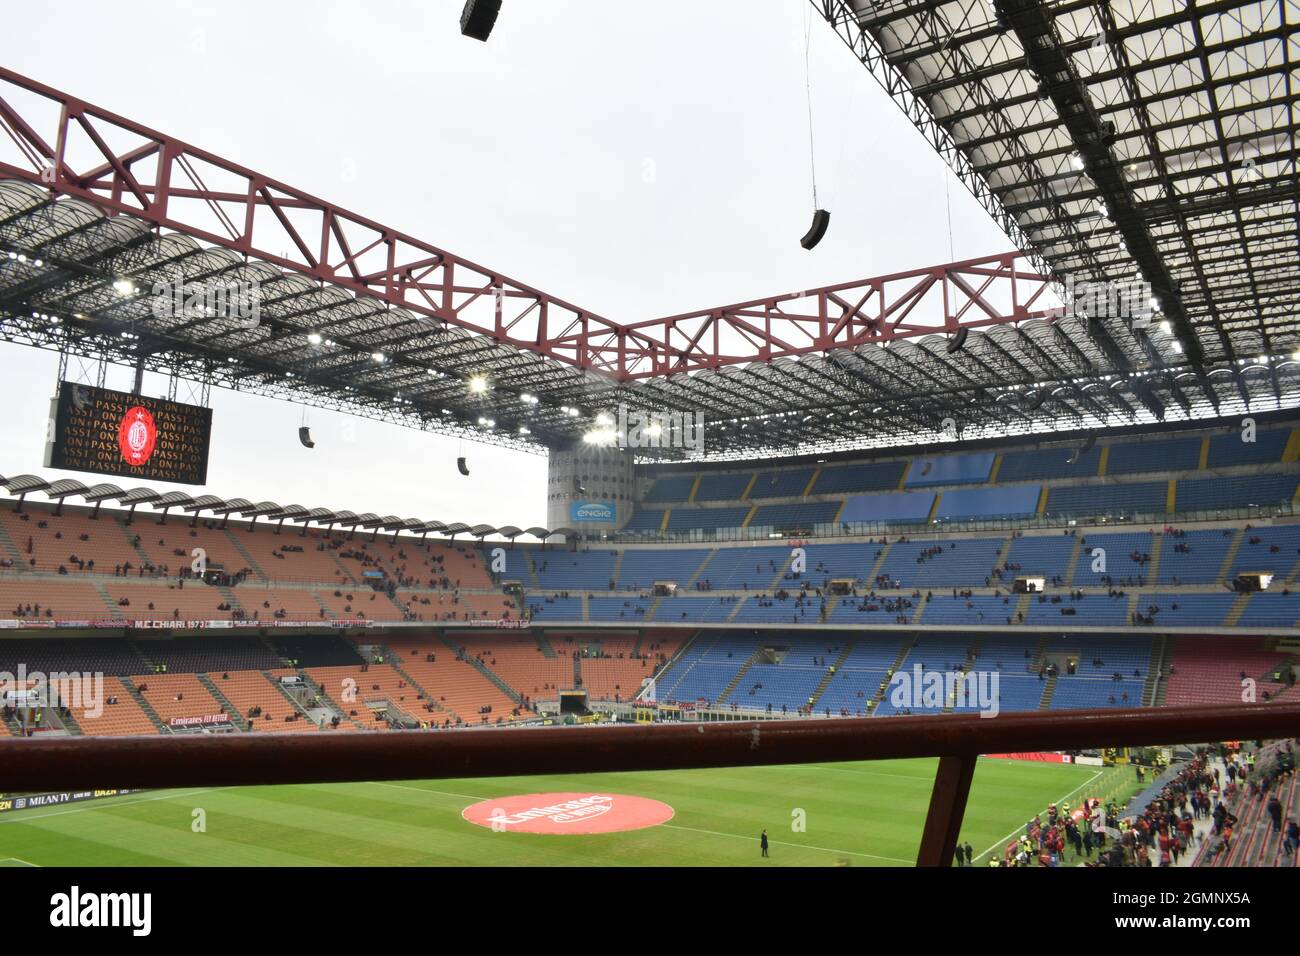 All'interno dello stadio San Siro/Giuseppe Meazza, AC Milan & Inter Milan  Foto stock - Alamy